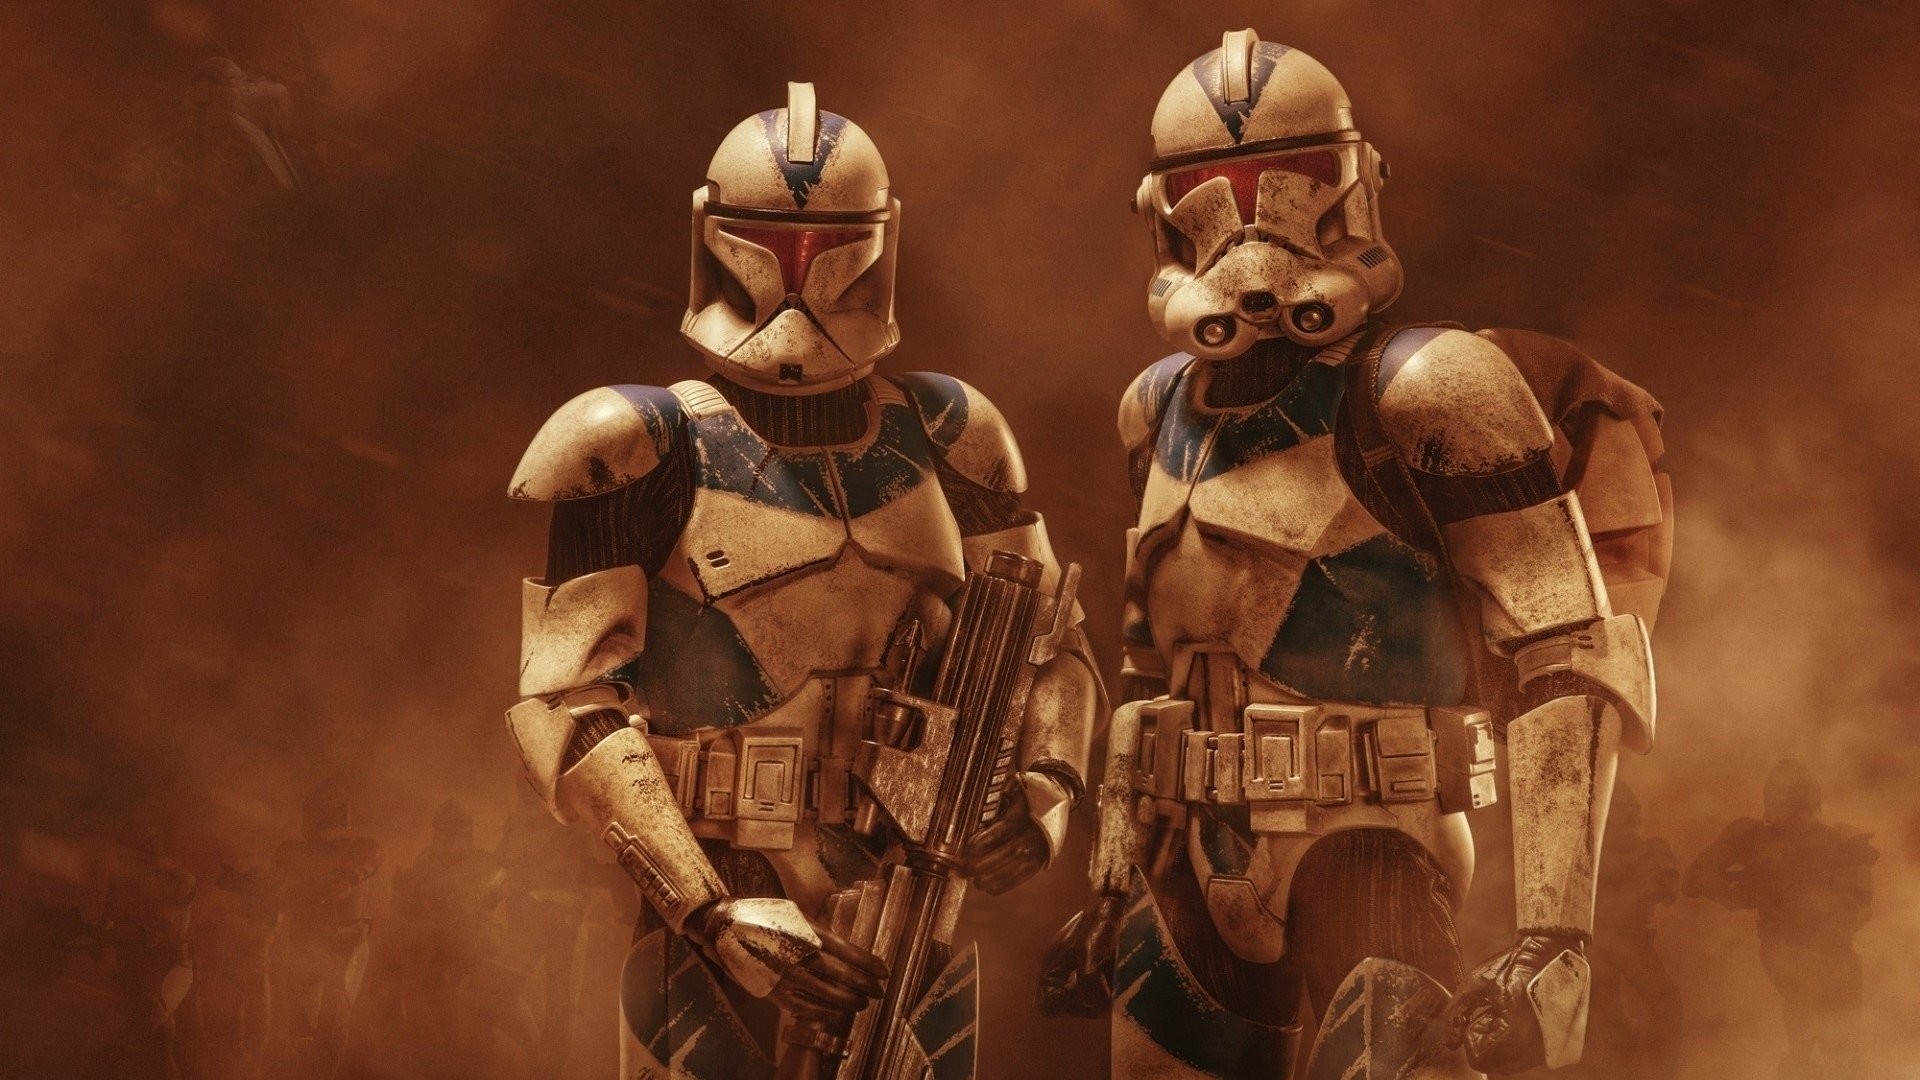 Star Wars: The Clone Wars StarWarscom